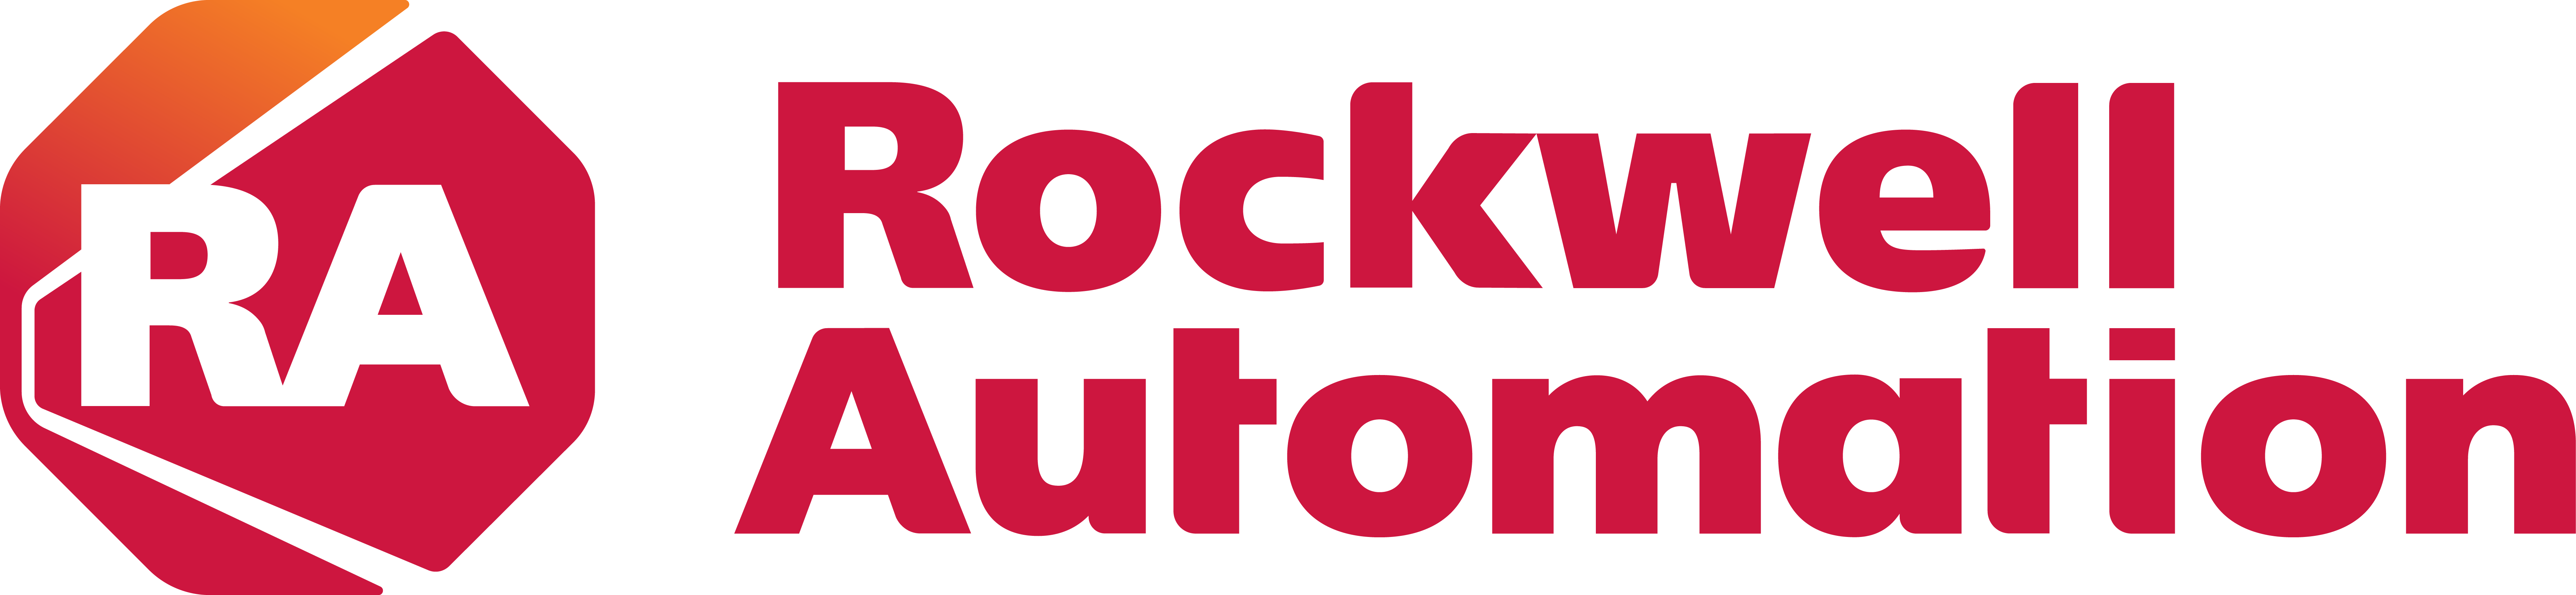 rockwell automation - logo